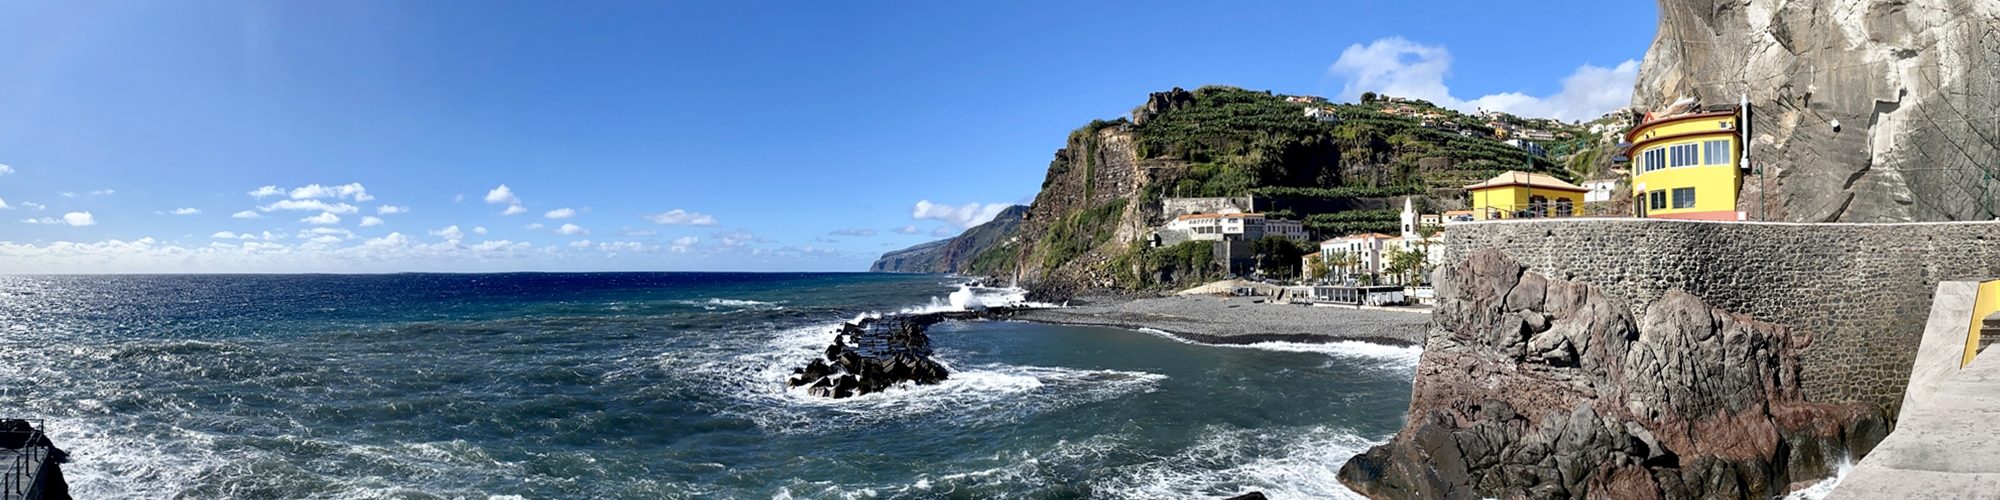 Blick übers Meer auf Madeira & Ponta do Sol